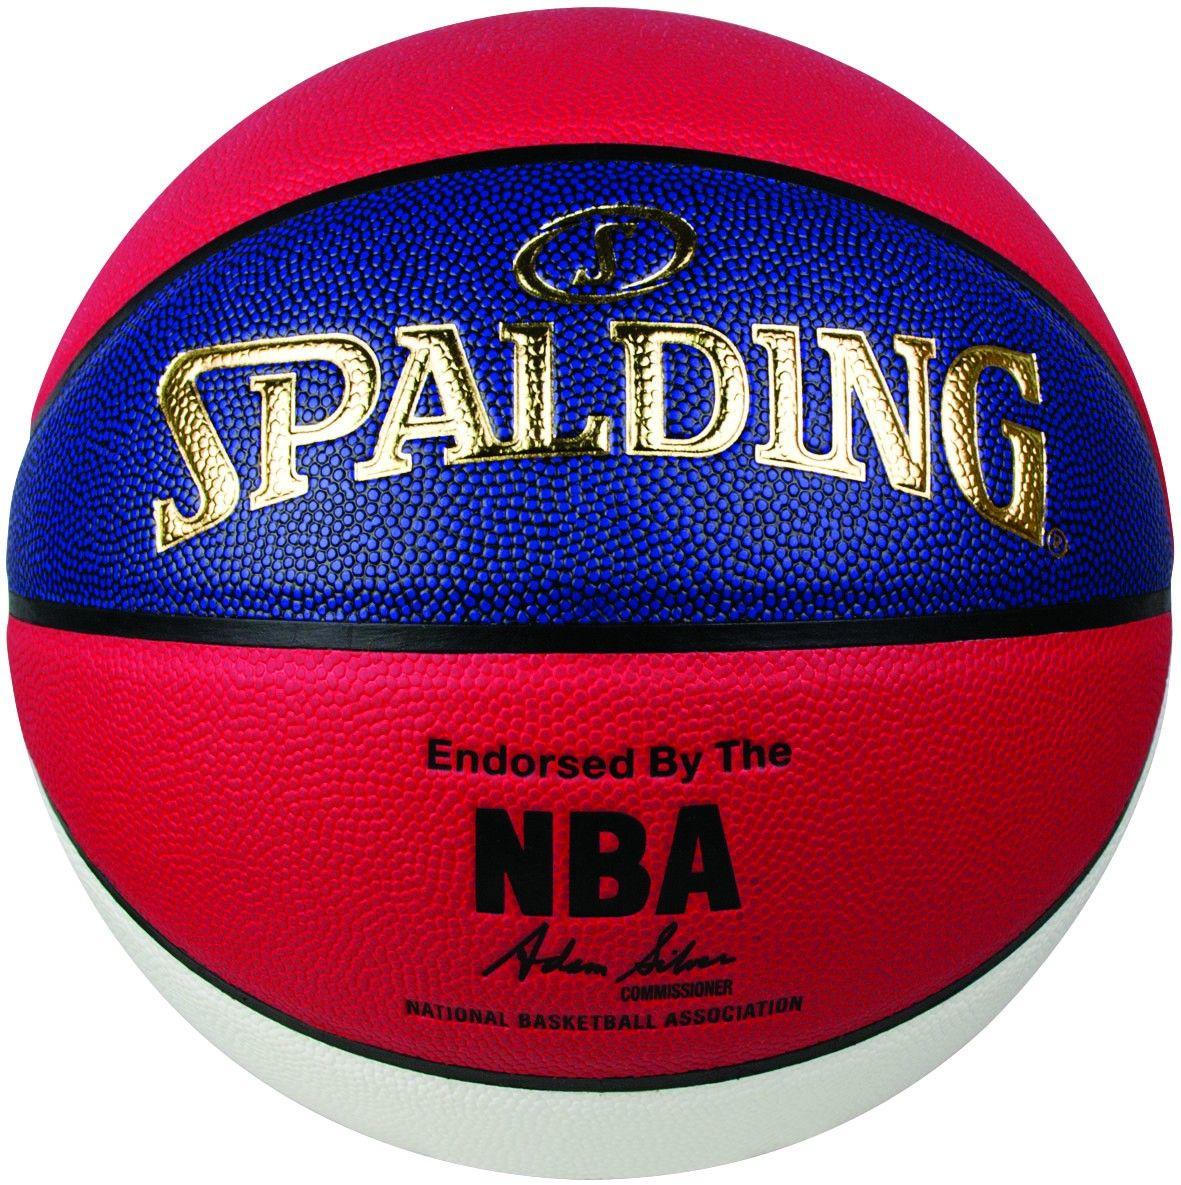 Red White Ball Logo - NBA Logoman - Red/White/Blue - Size 7